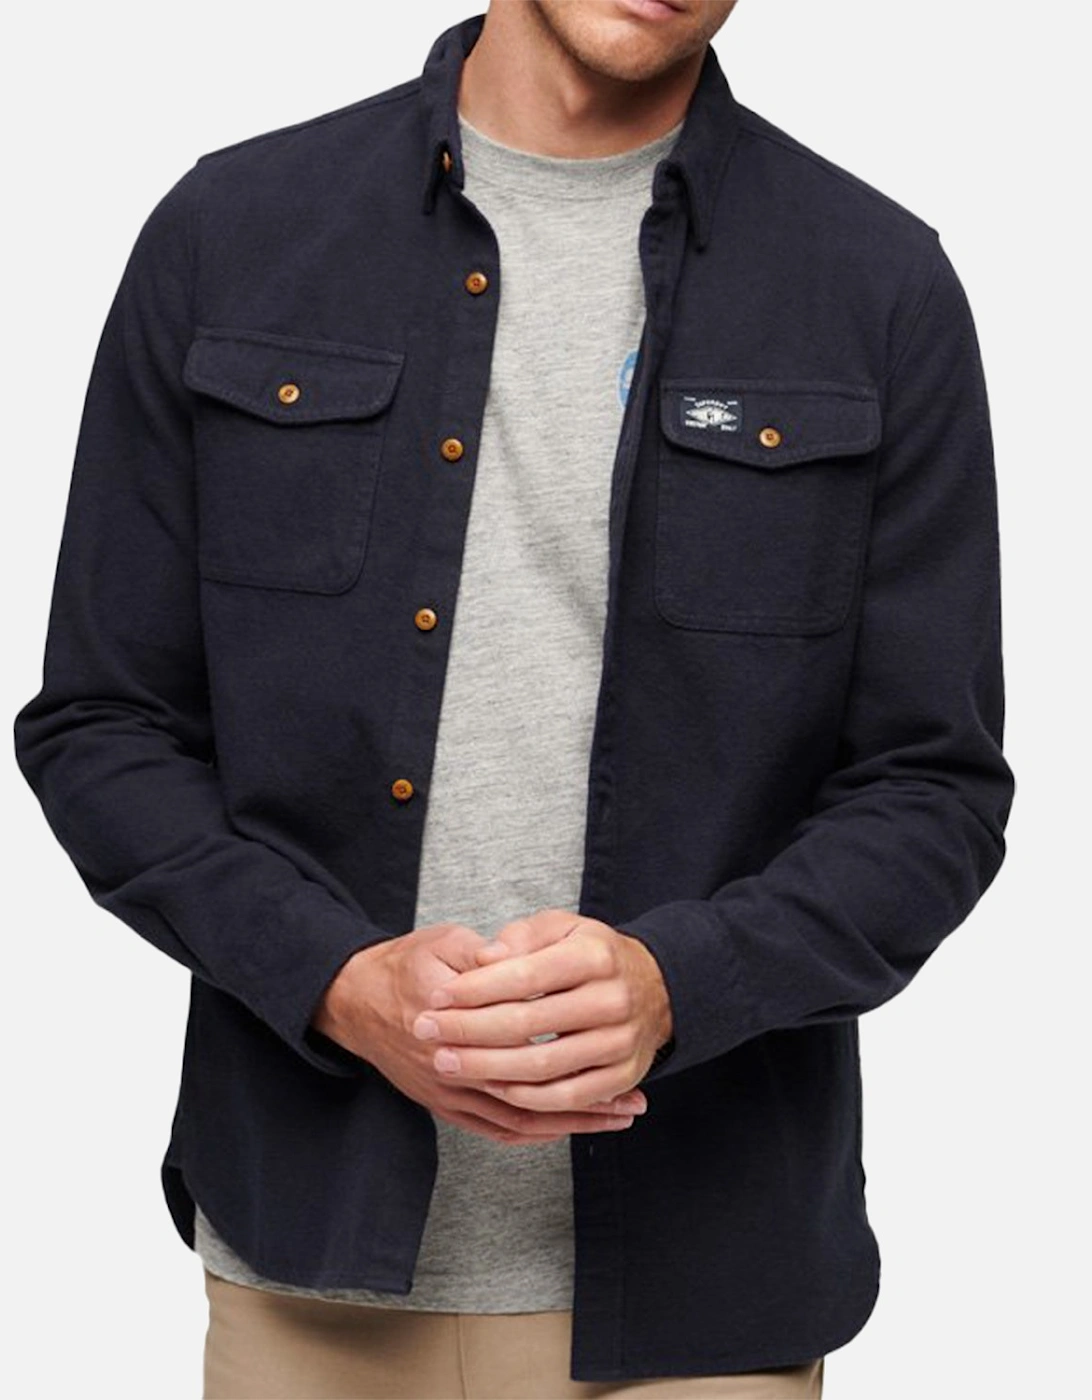 Mens Flannel Workwear Shirt (Navy)